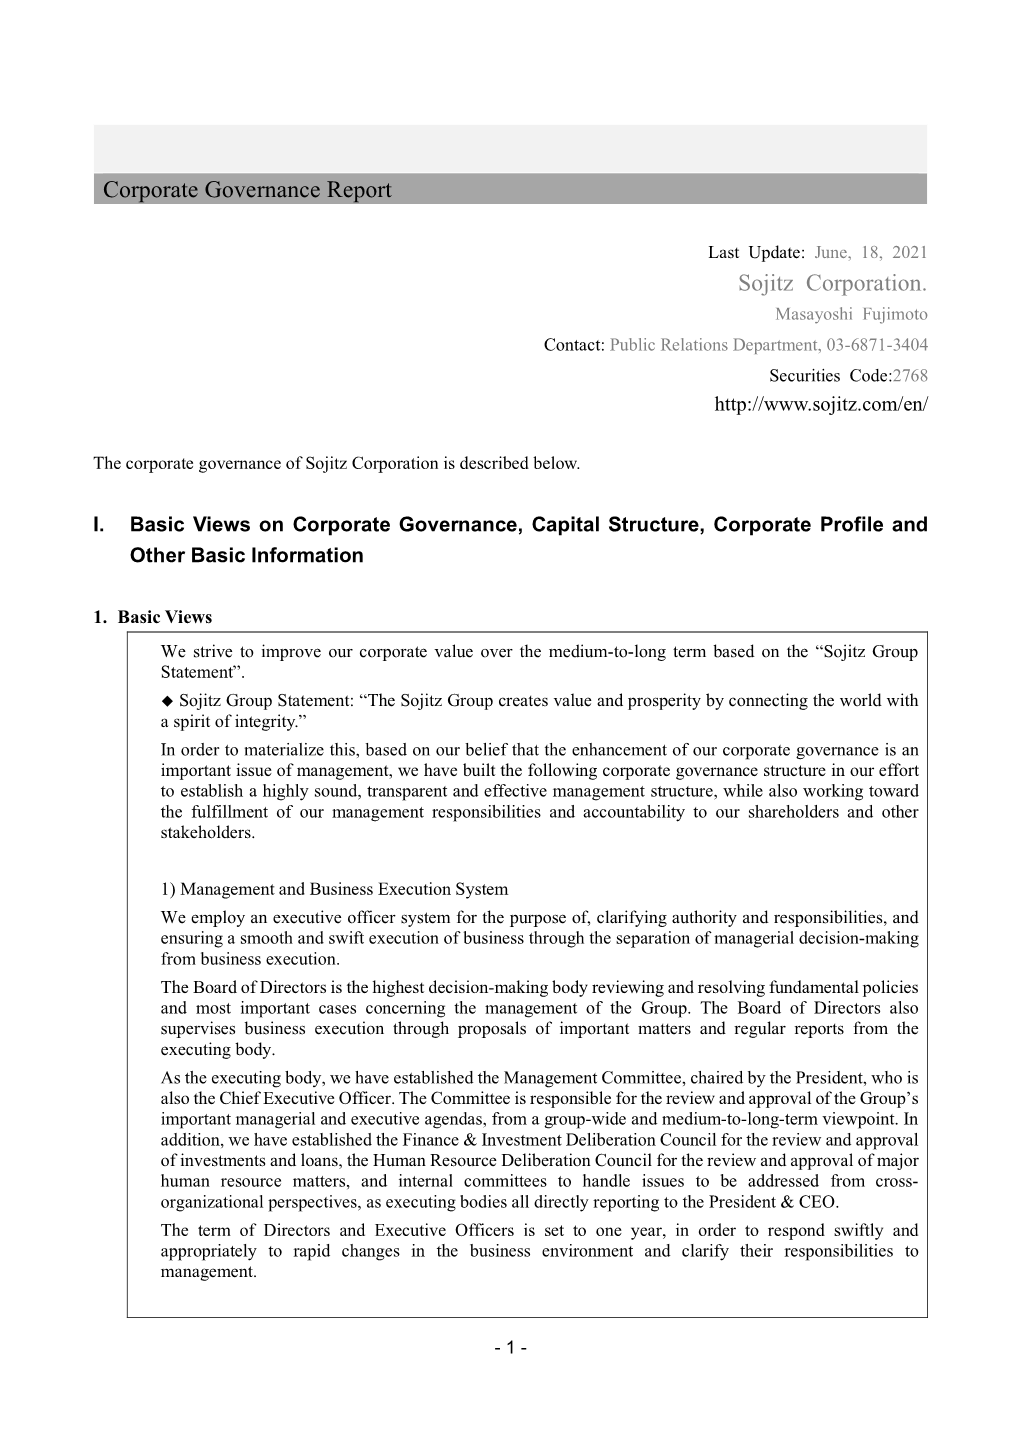 Corporate Governance Report Sojitz Corporation